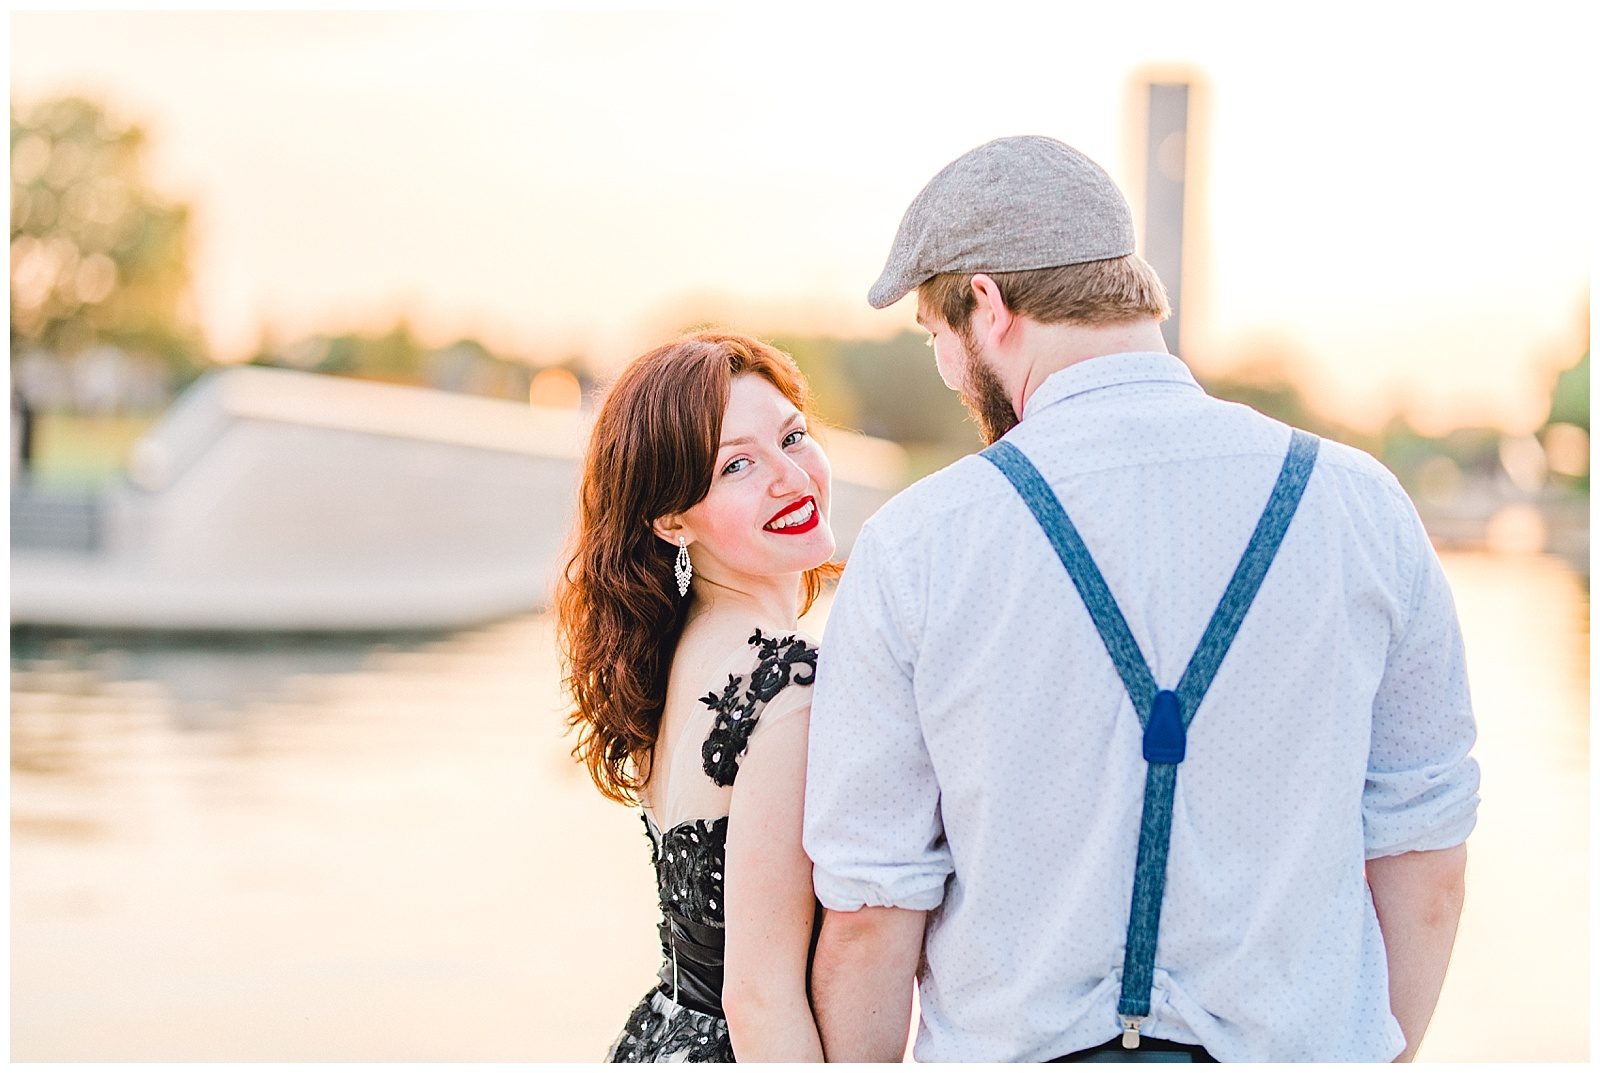 Katelyn & Kory at the Canal | Aubrey Lynn Photography | Indiana Wedding Photographer